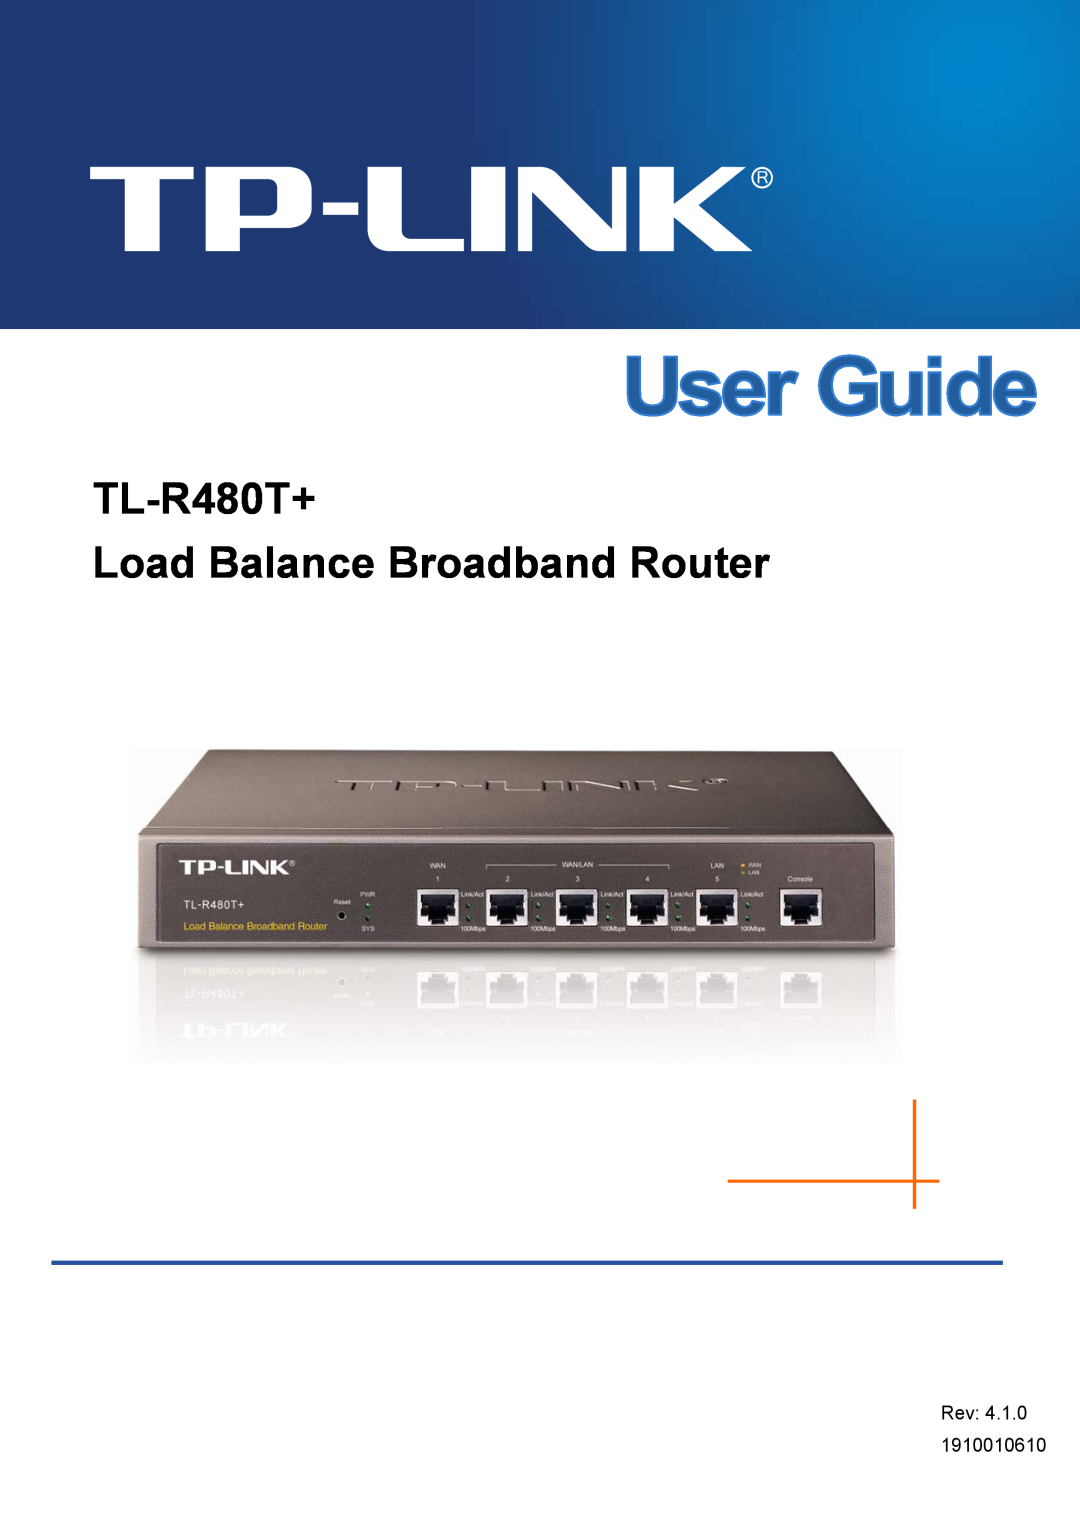 TP-Link manual TL-R480T+ Load Balance Broadband Router, Rev 4.1.0 